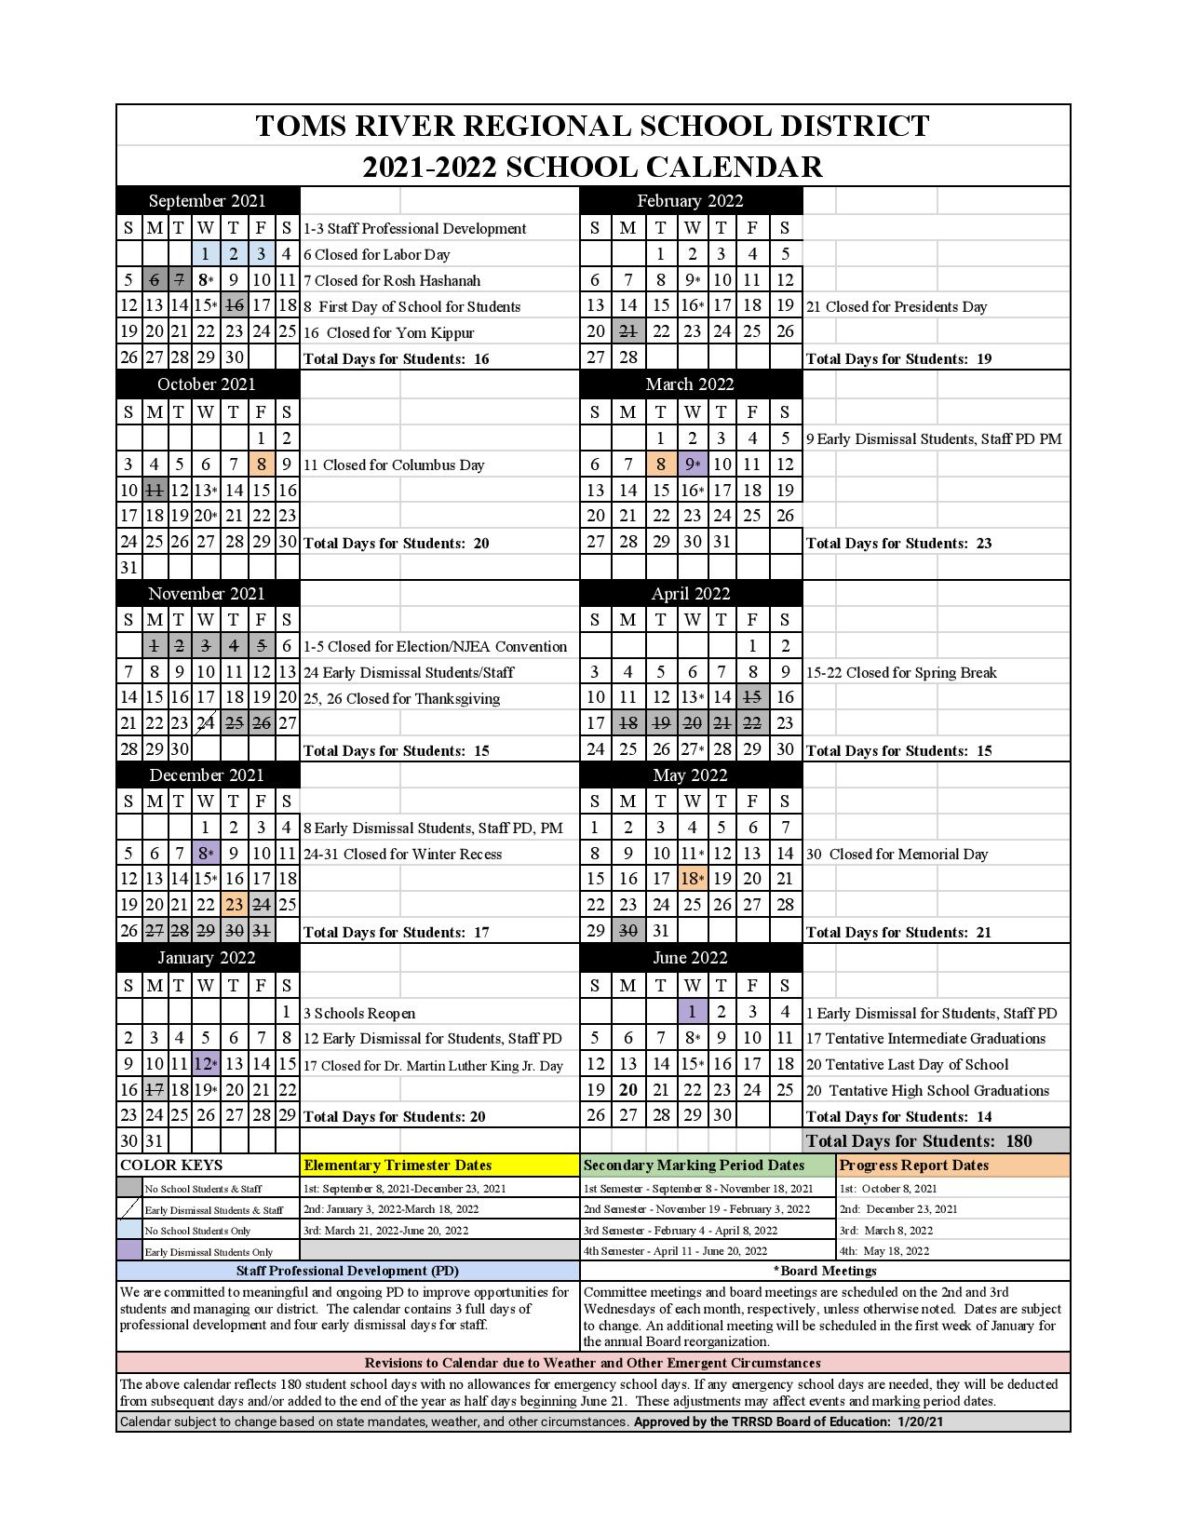 toms-river-school-district-calendar-2021-2022-in-pdf